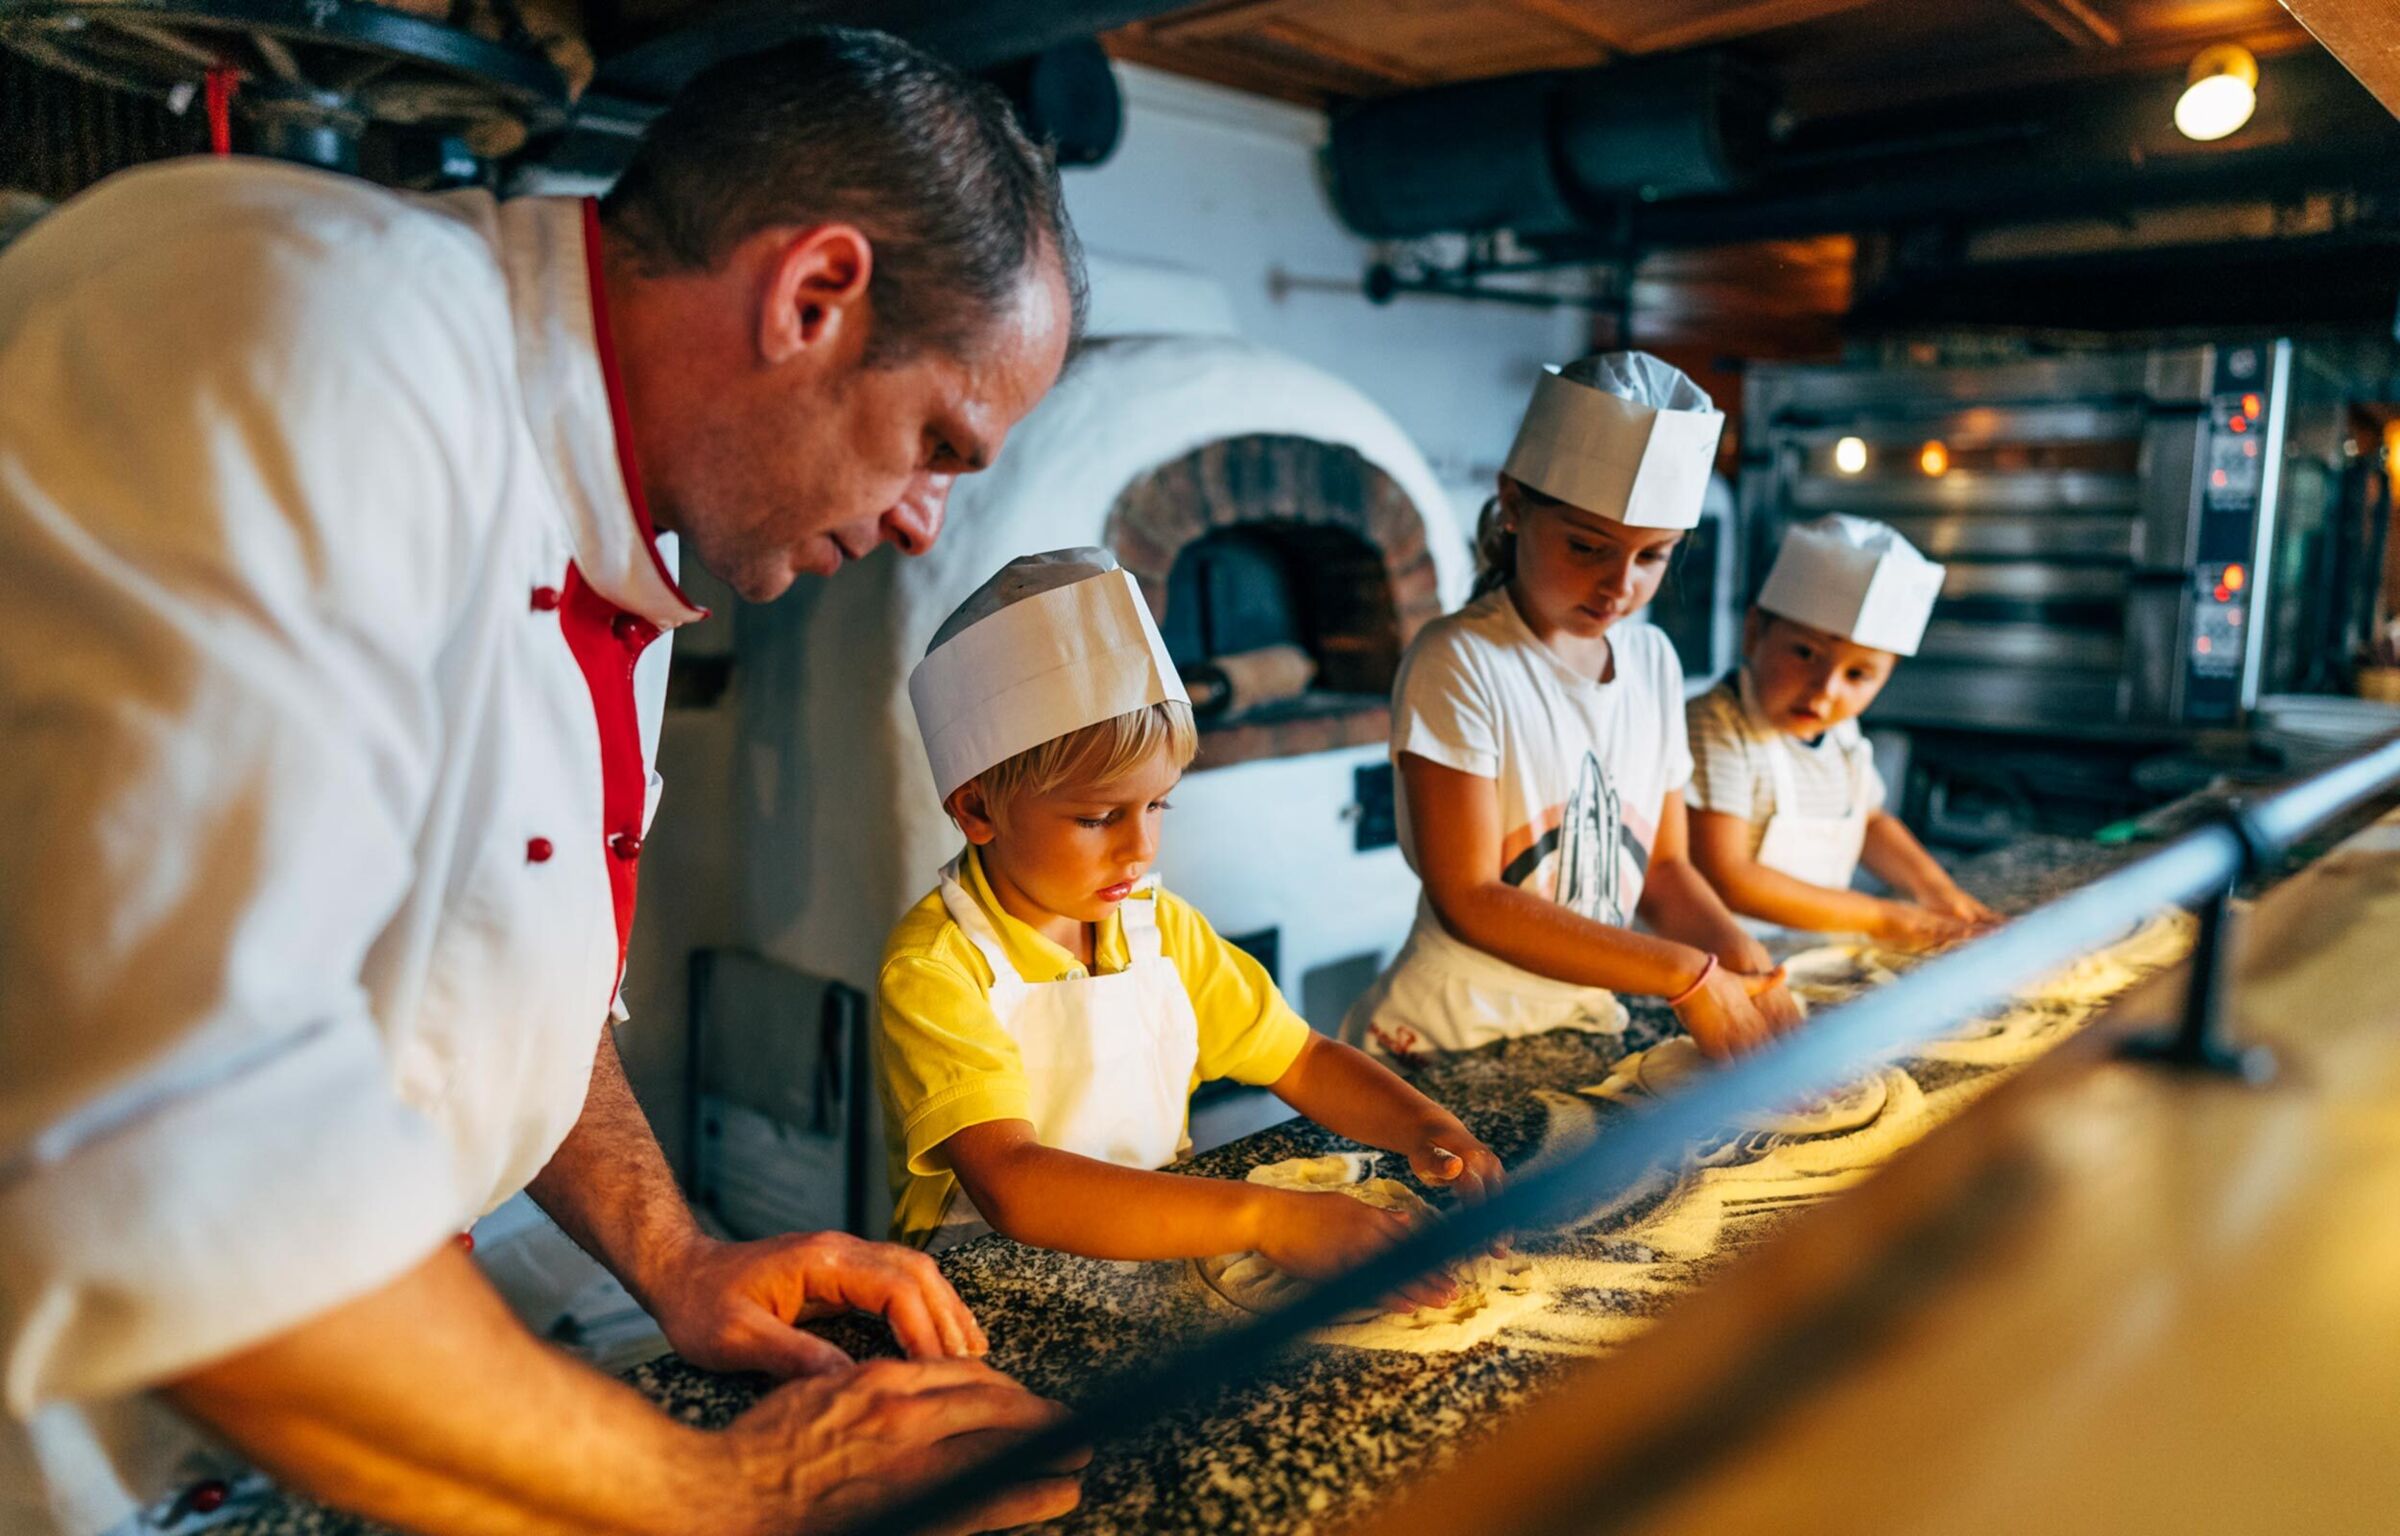 Koch hilft Kinder bei dem kneten des Pizzateiges.